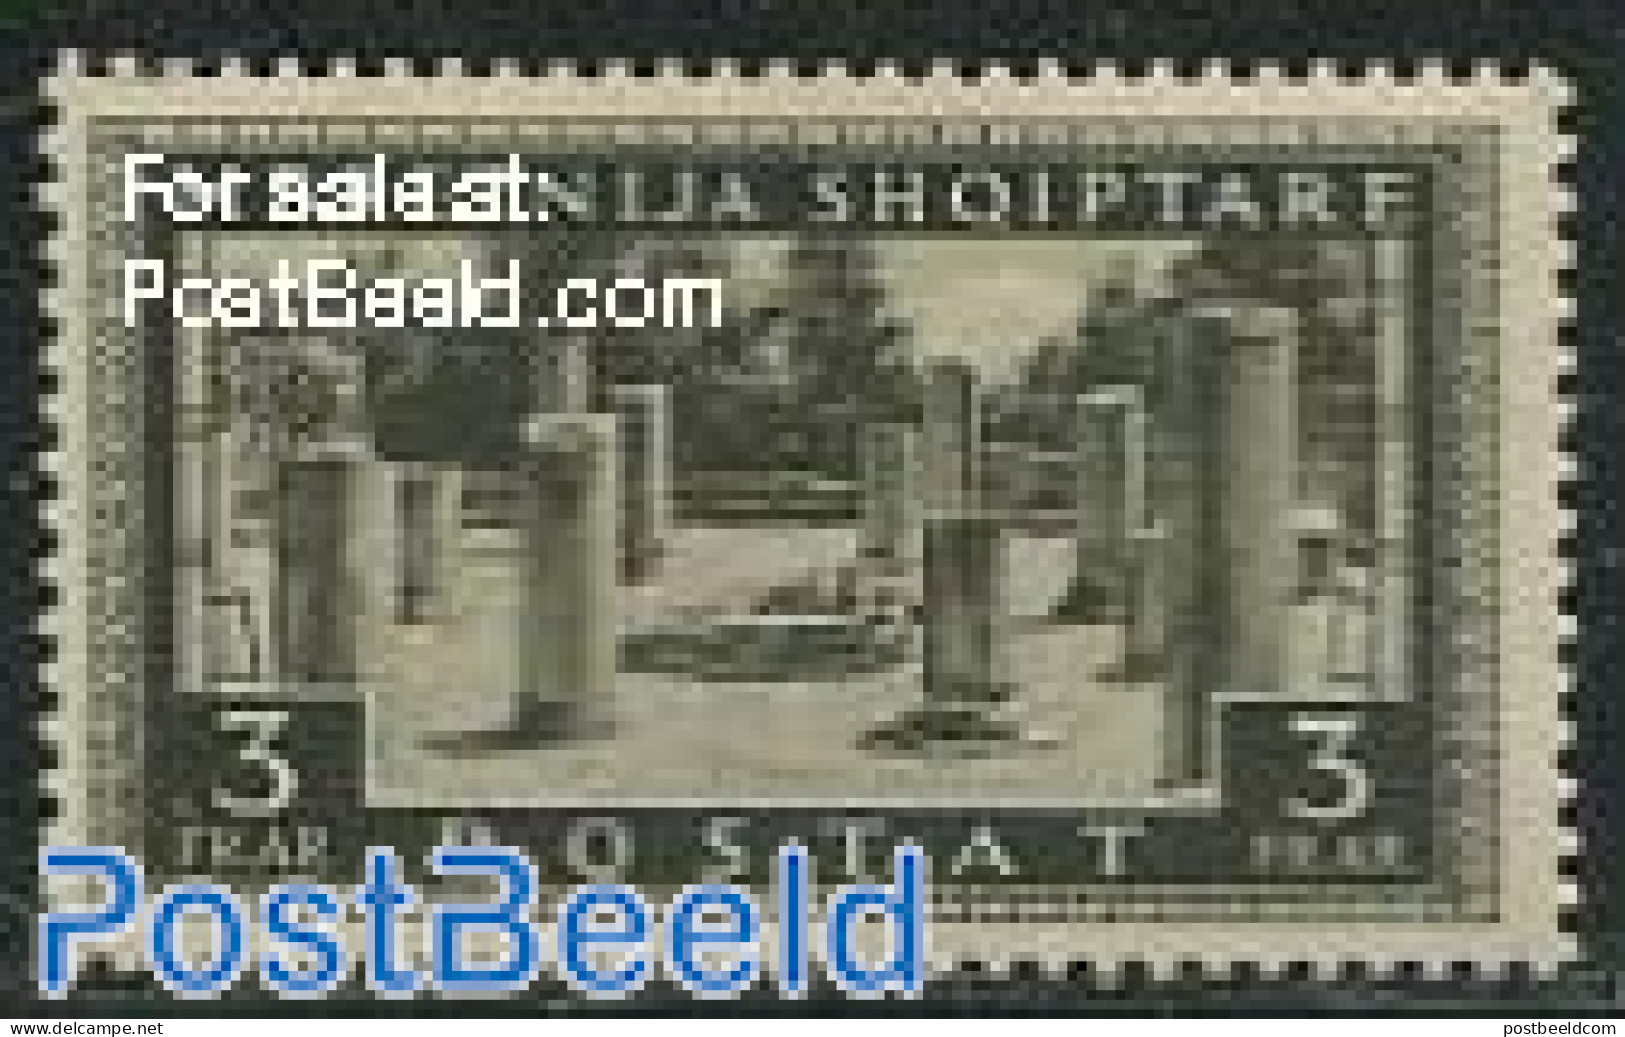 Albania 1939 3Fr, Stamp Out Of Set, Mint NH - Albanië